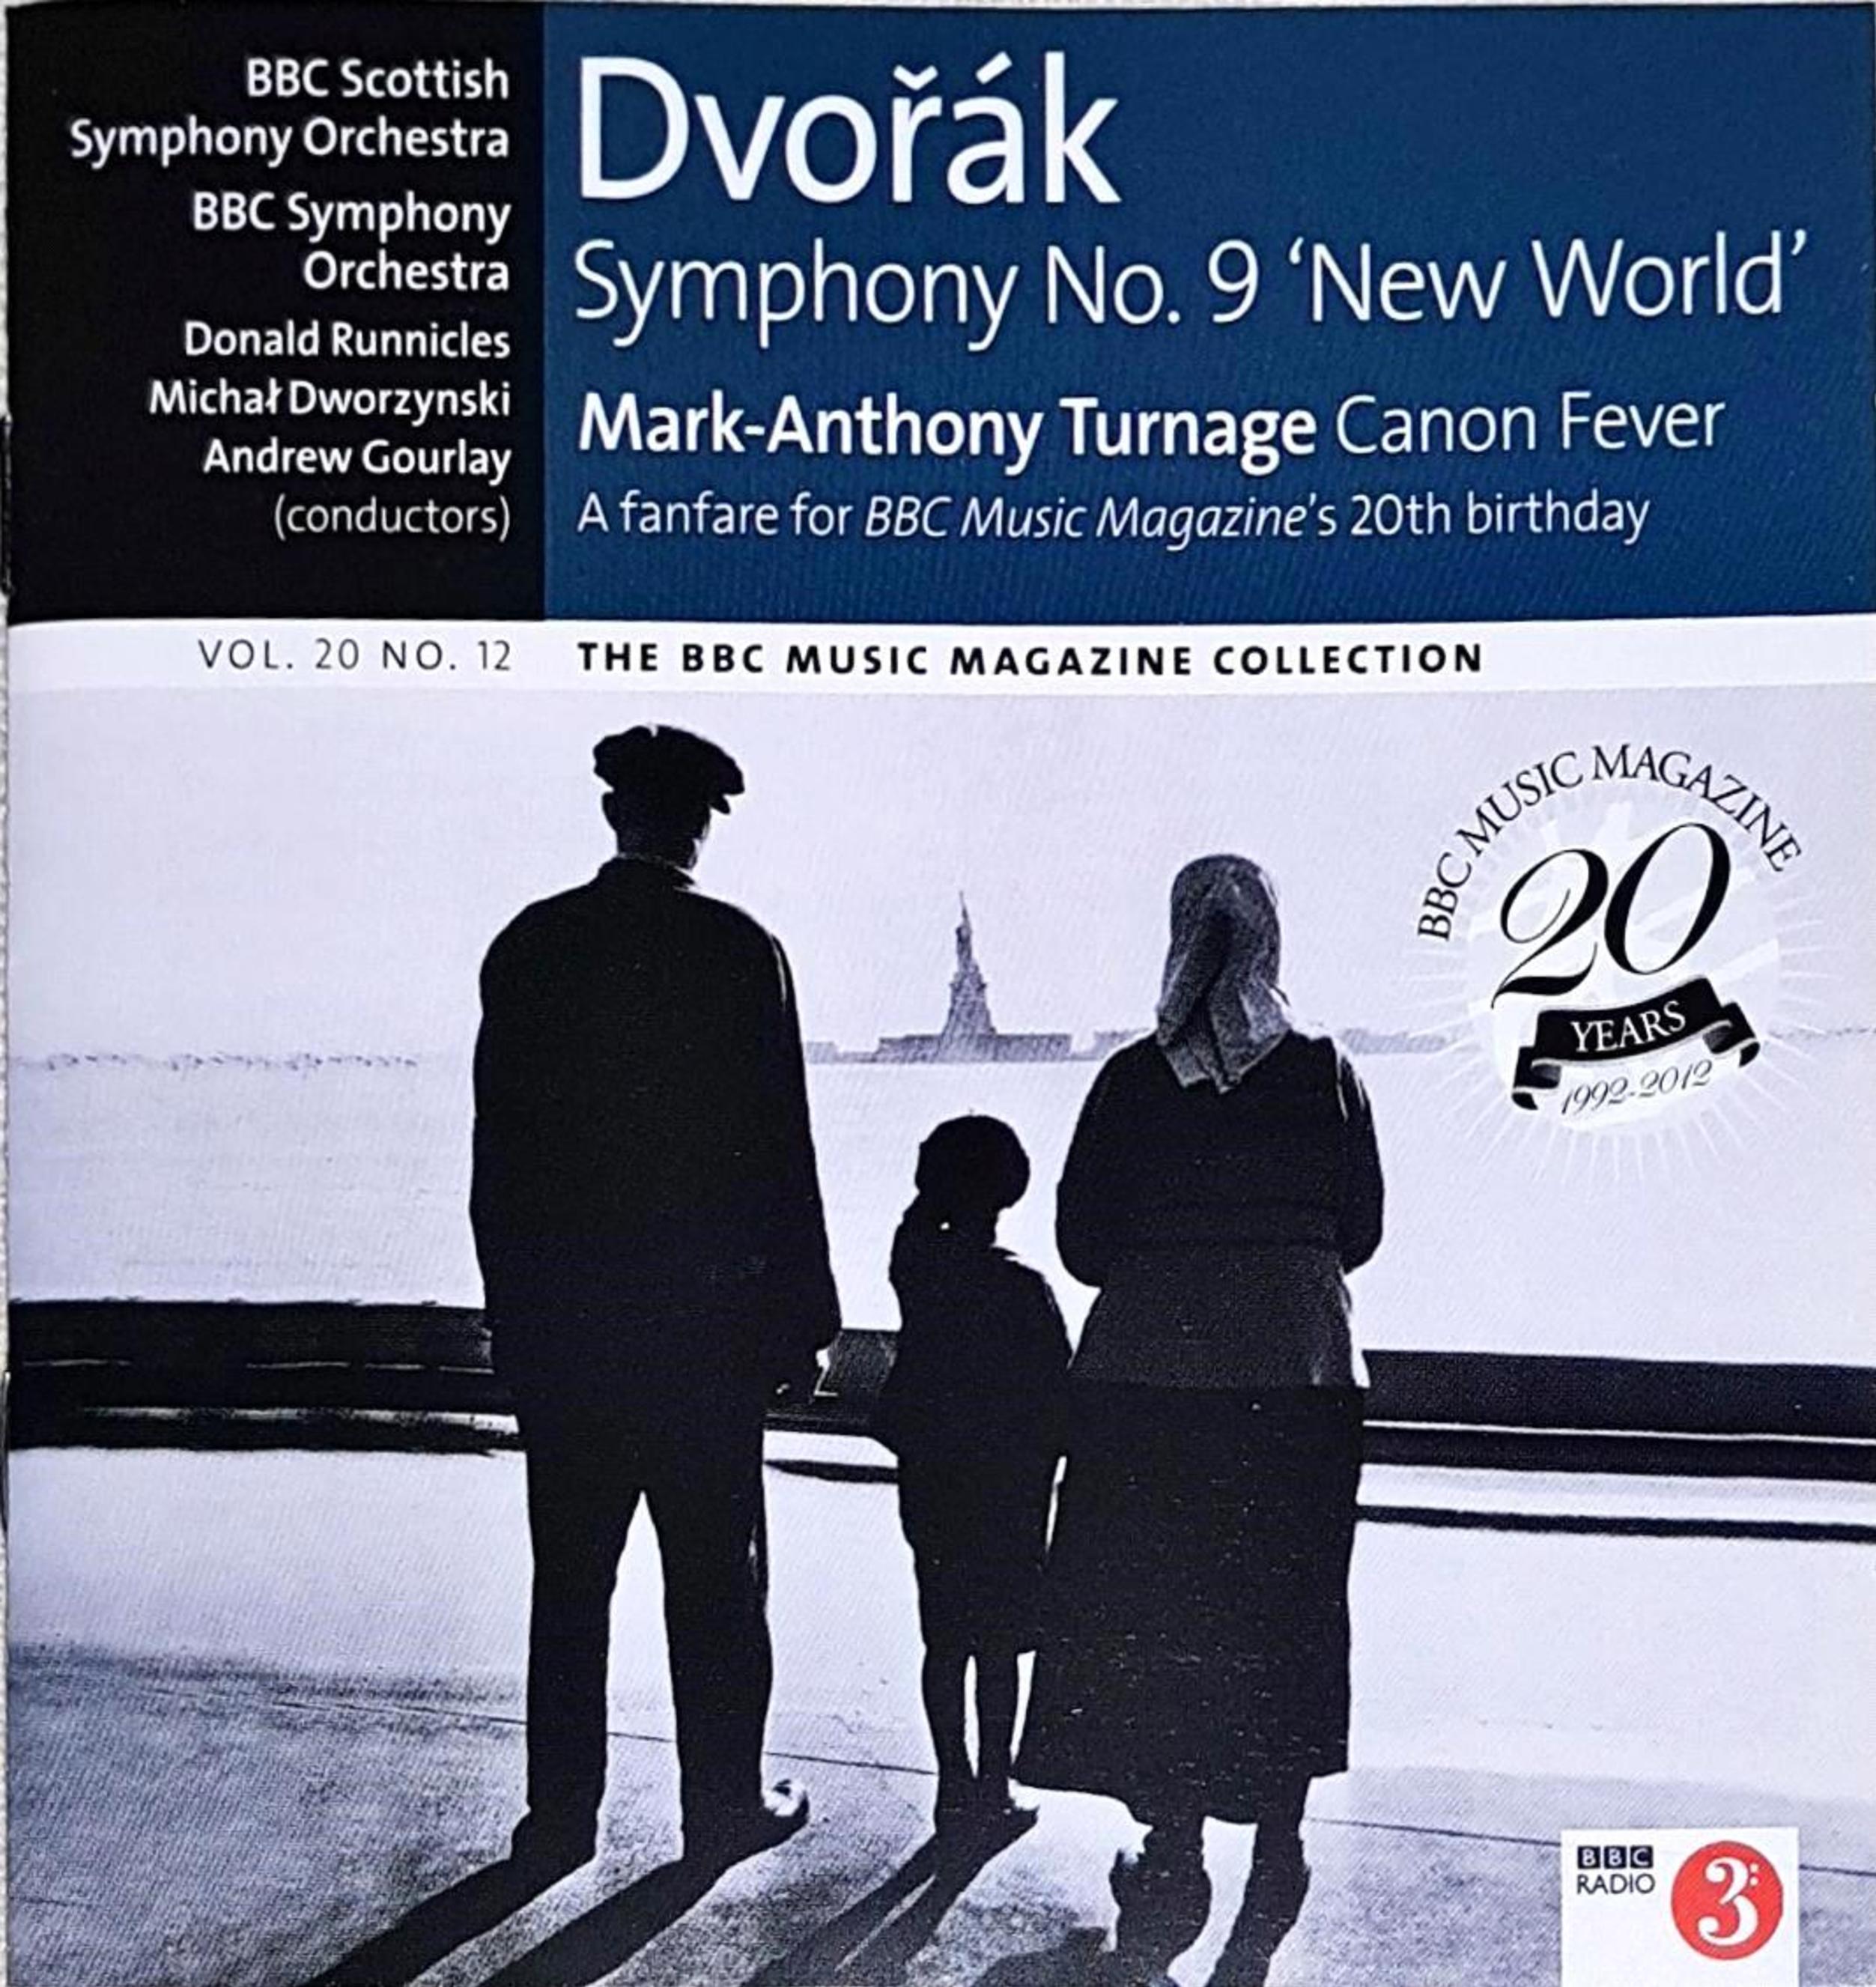 Dvorák Symphony No. 9 'New World' Turnage Canon Fever